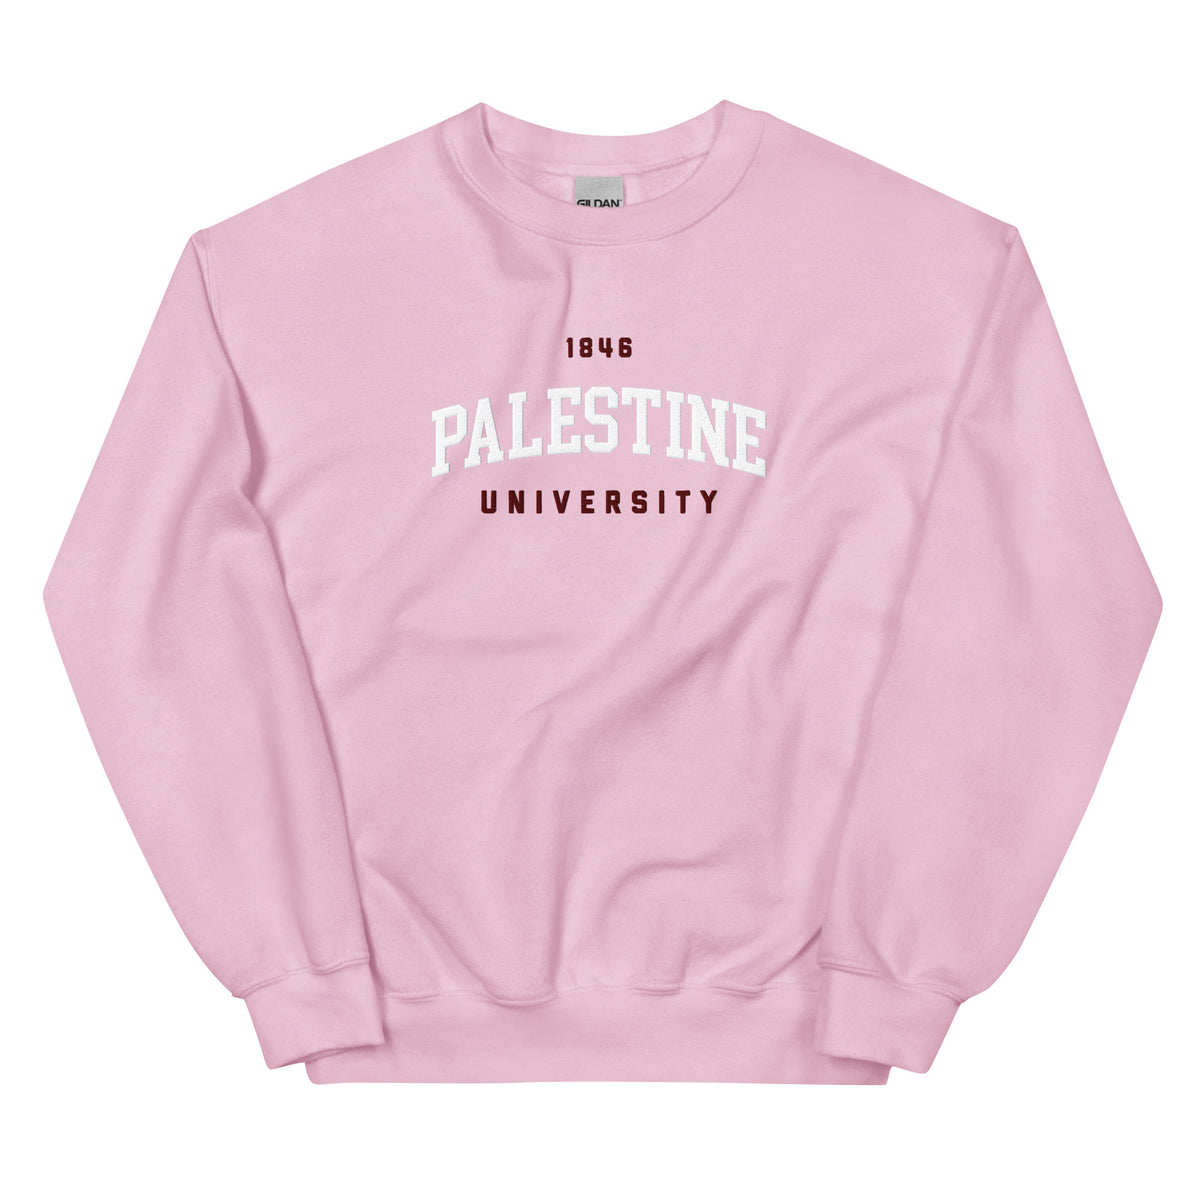 Palestine University 1846 sweatshirt in pink by Dar Collective